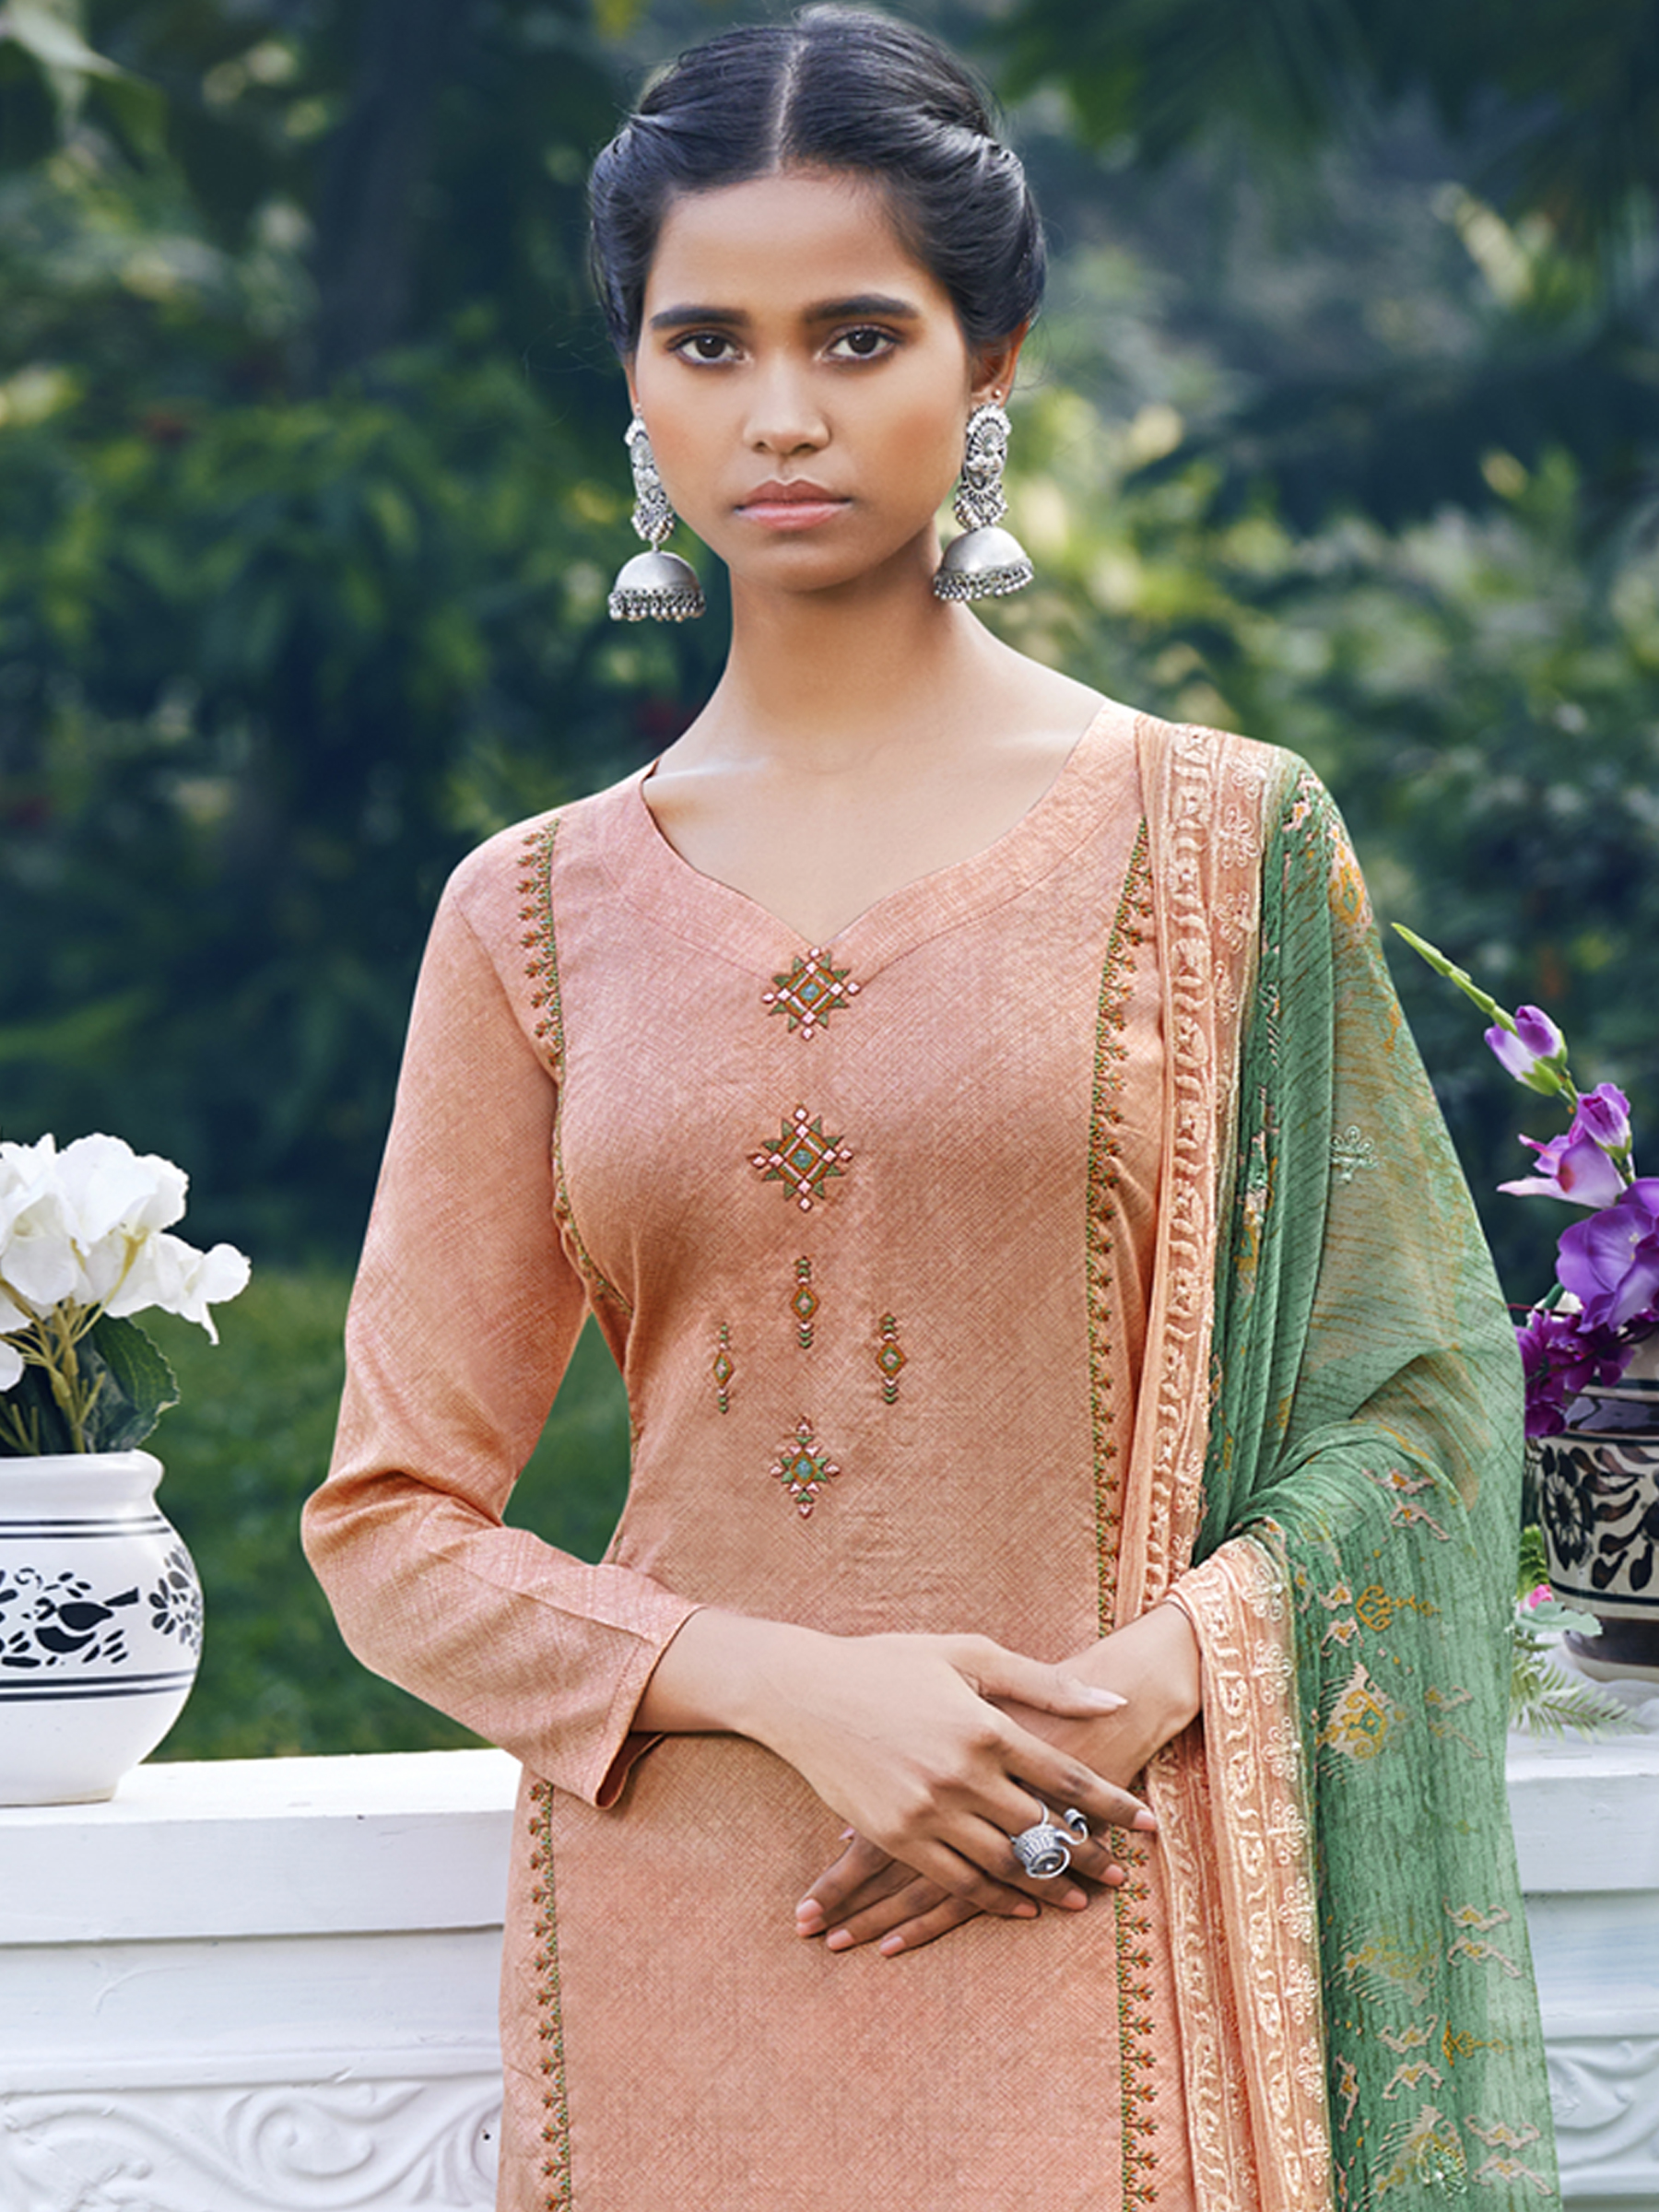 Cotton Linen lakhnavi Work Dress Material Best Price || Latest Design Of  lakhnavi Work Suit - YouTube